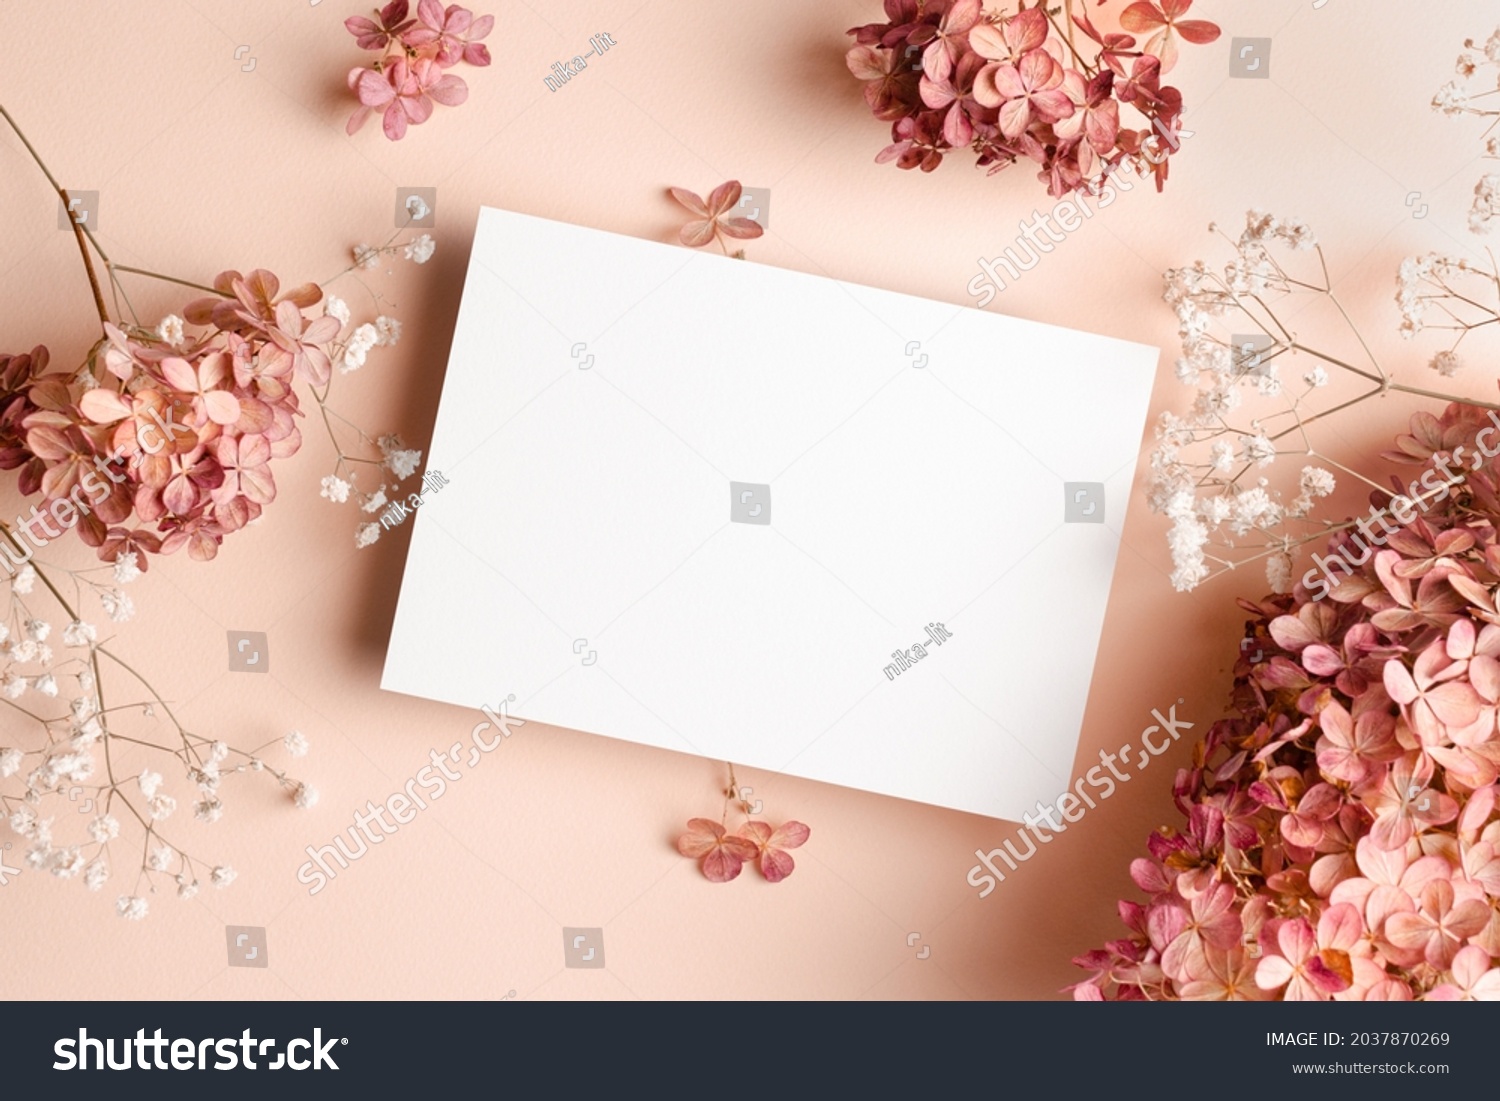 Invitation card mockup with hydrangea and gypsophila flowers decorations. Blank greeting card mockup. #2037870269